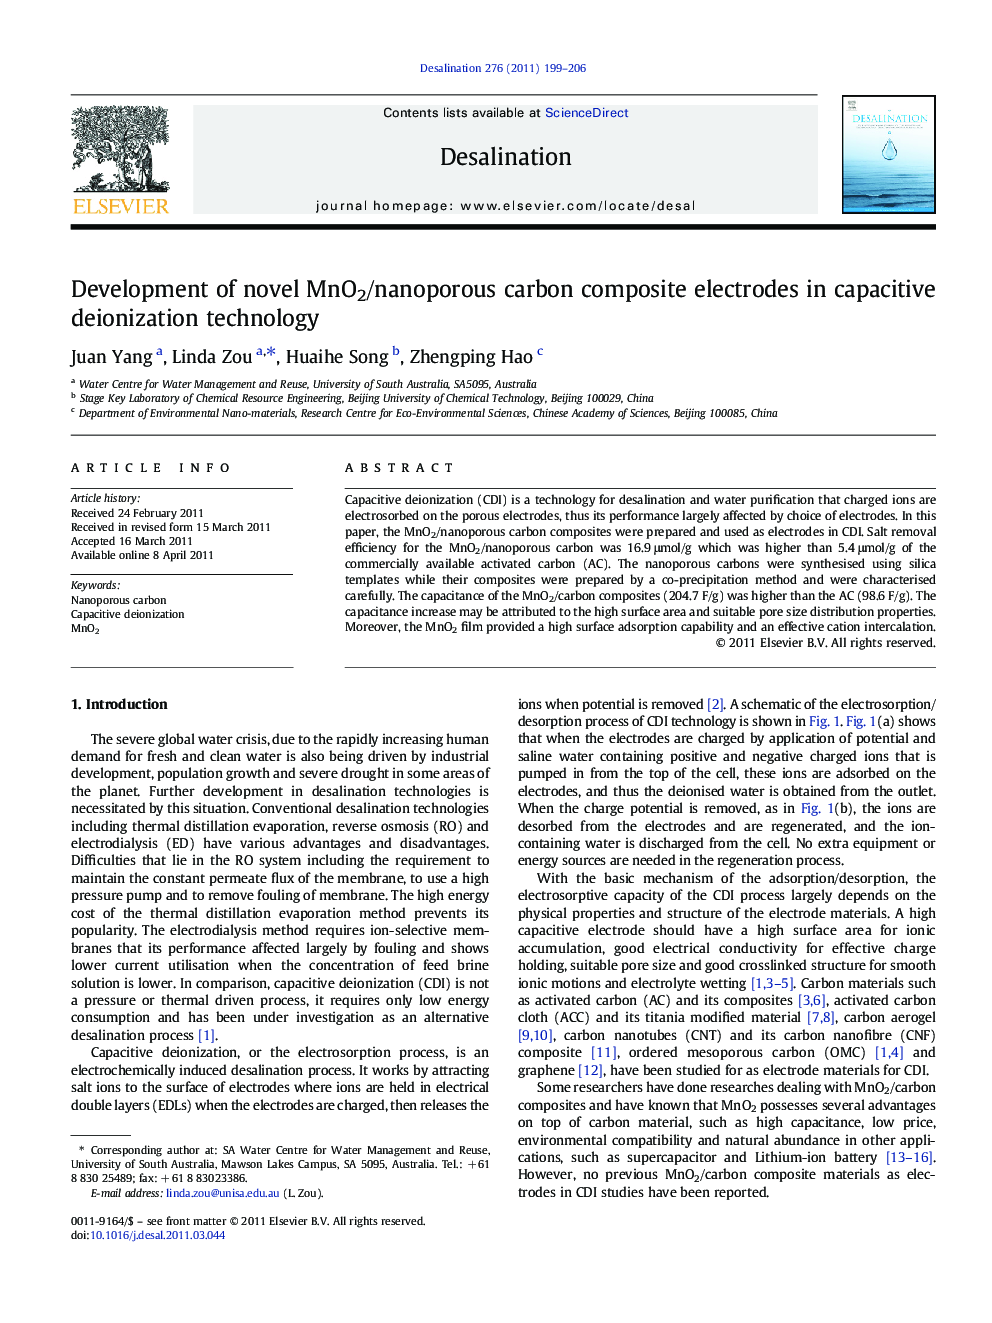 Development of novel MnO2/nanoporous carbon composite electrodes in capacitive deionization technology